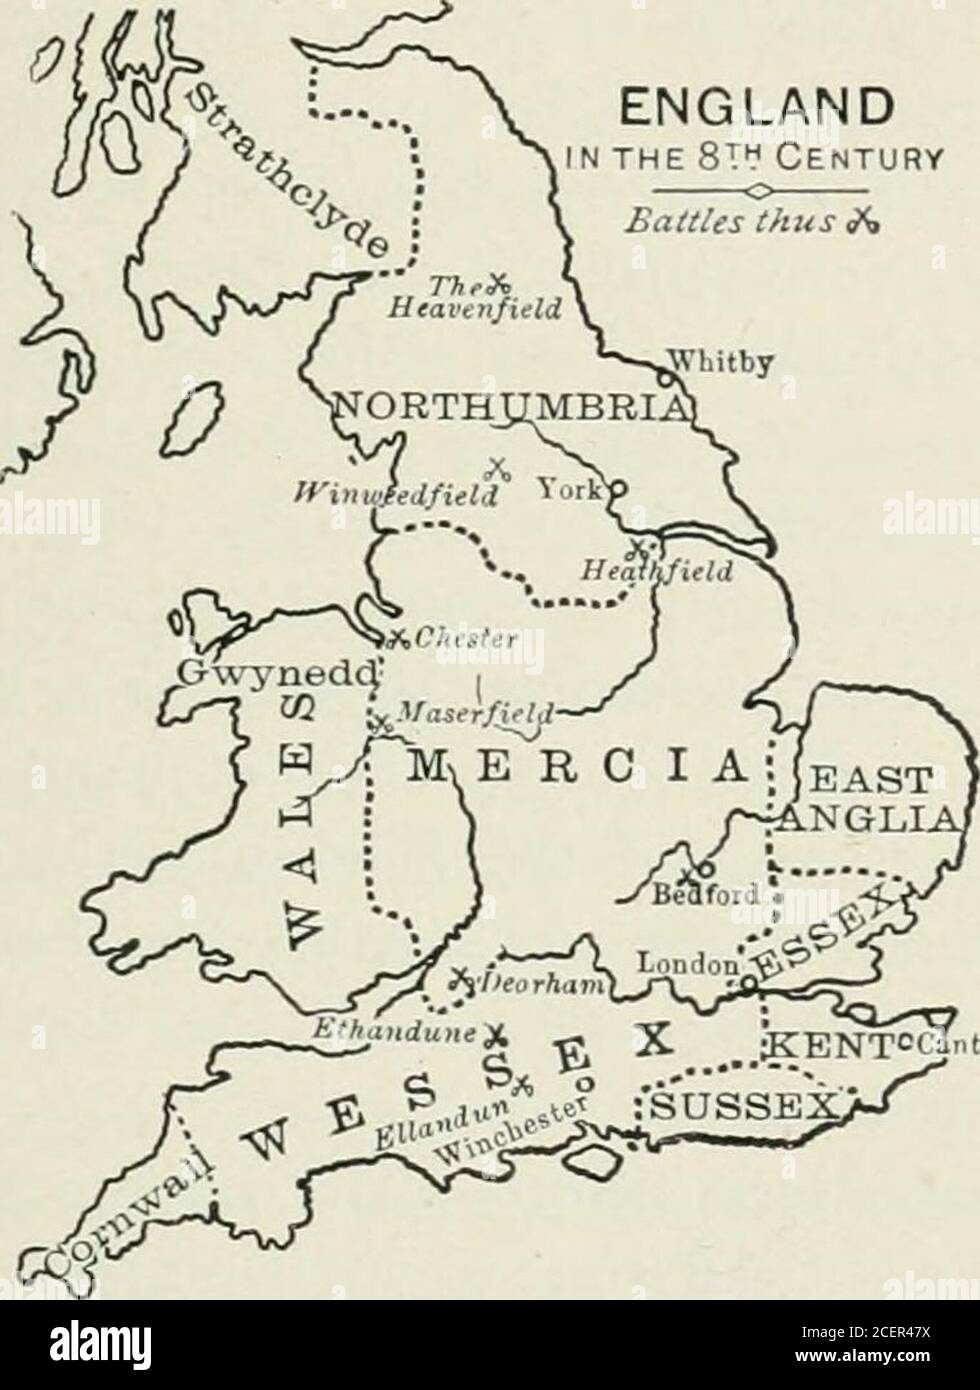 Англия 9 век. Мерсия Нортумбрия Уэссекс. Нортумбрия на карте Англии. Нортумбрия на карте средневековья. Карта Англии 9 век.